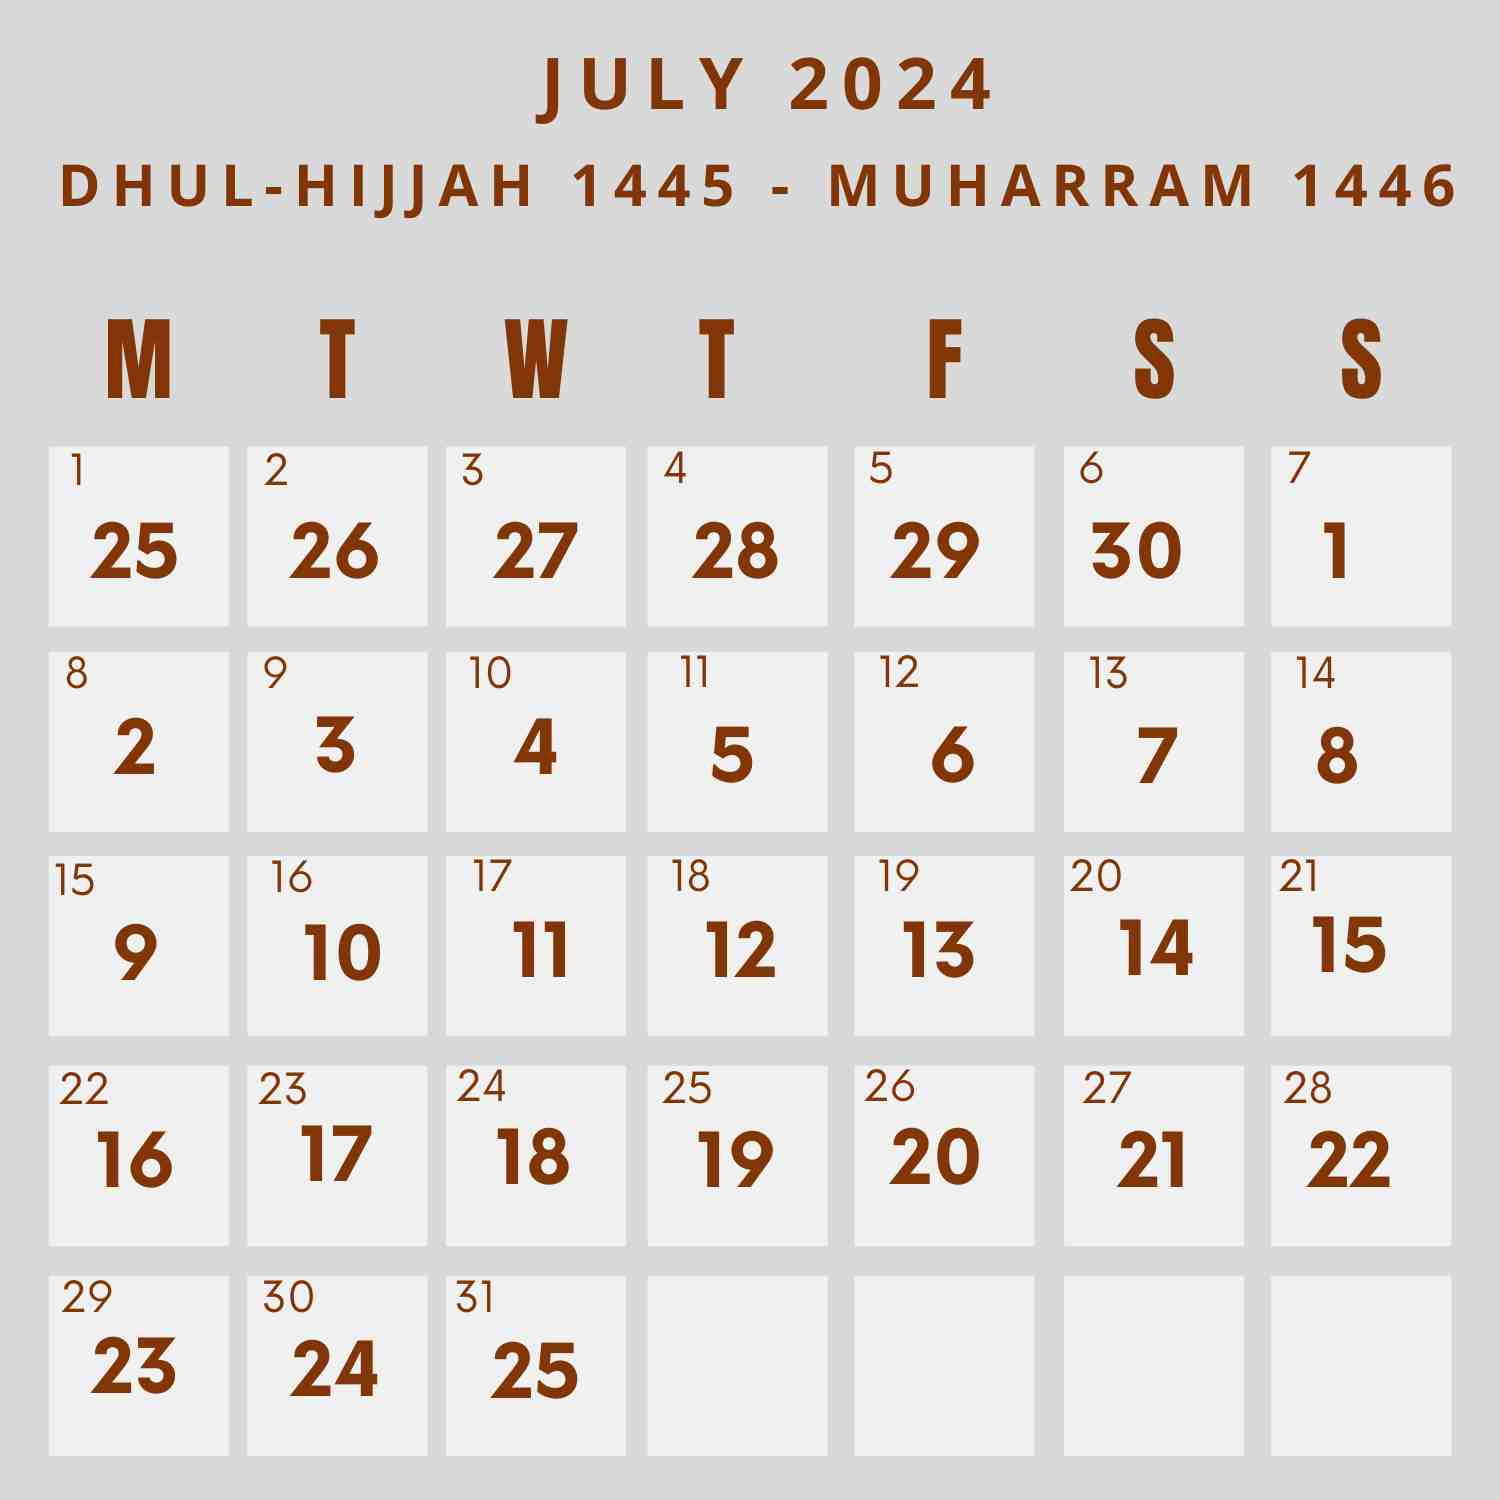 Islamic Calendar 2024 - Khwajadarbar in 1 July 2024 In Islamic Calendar